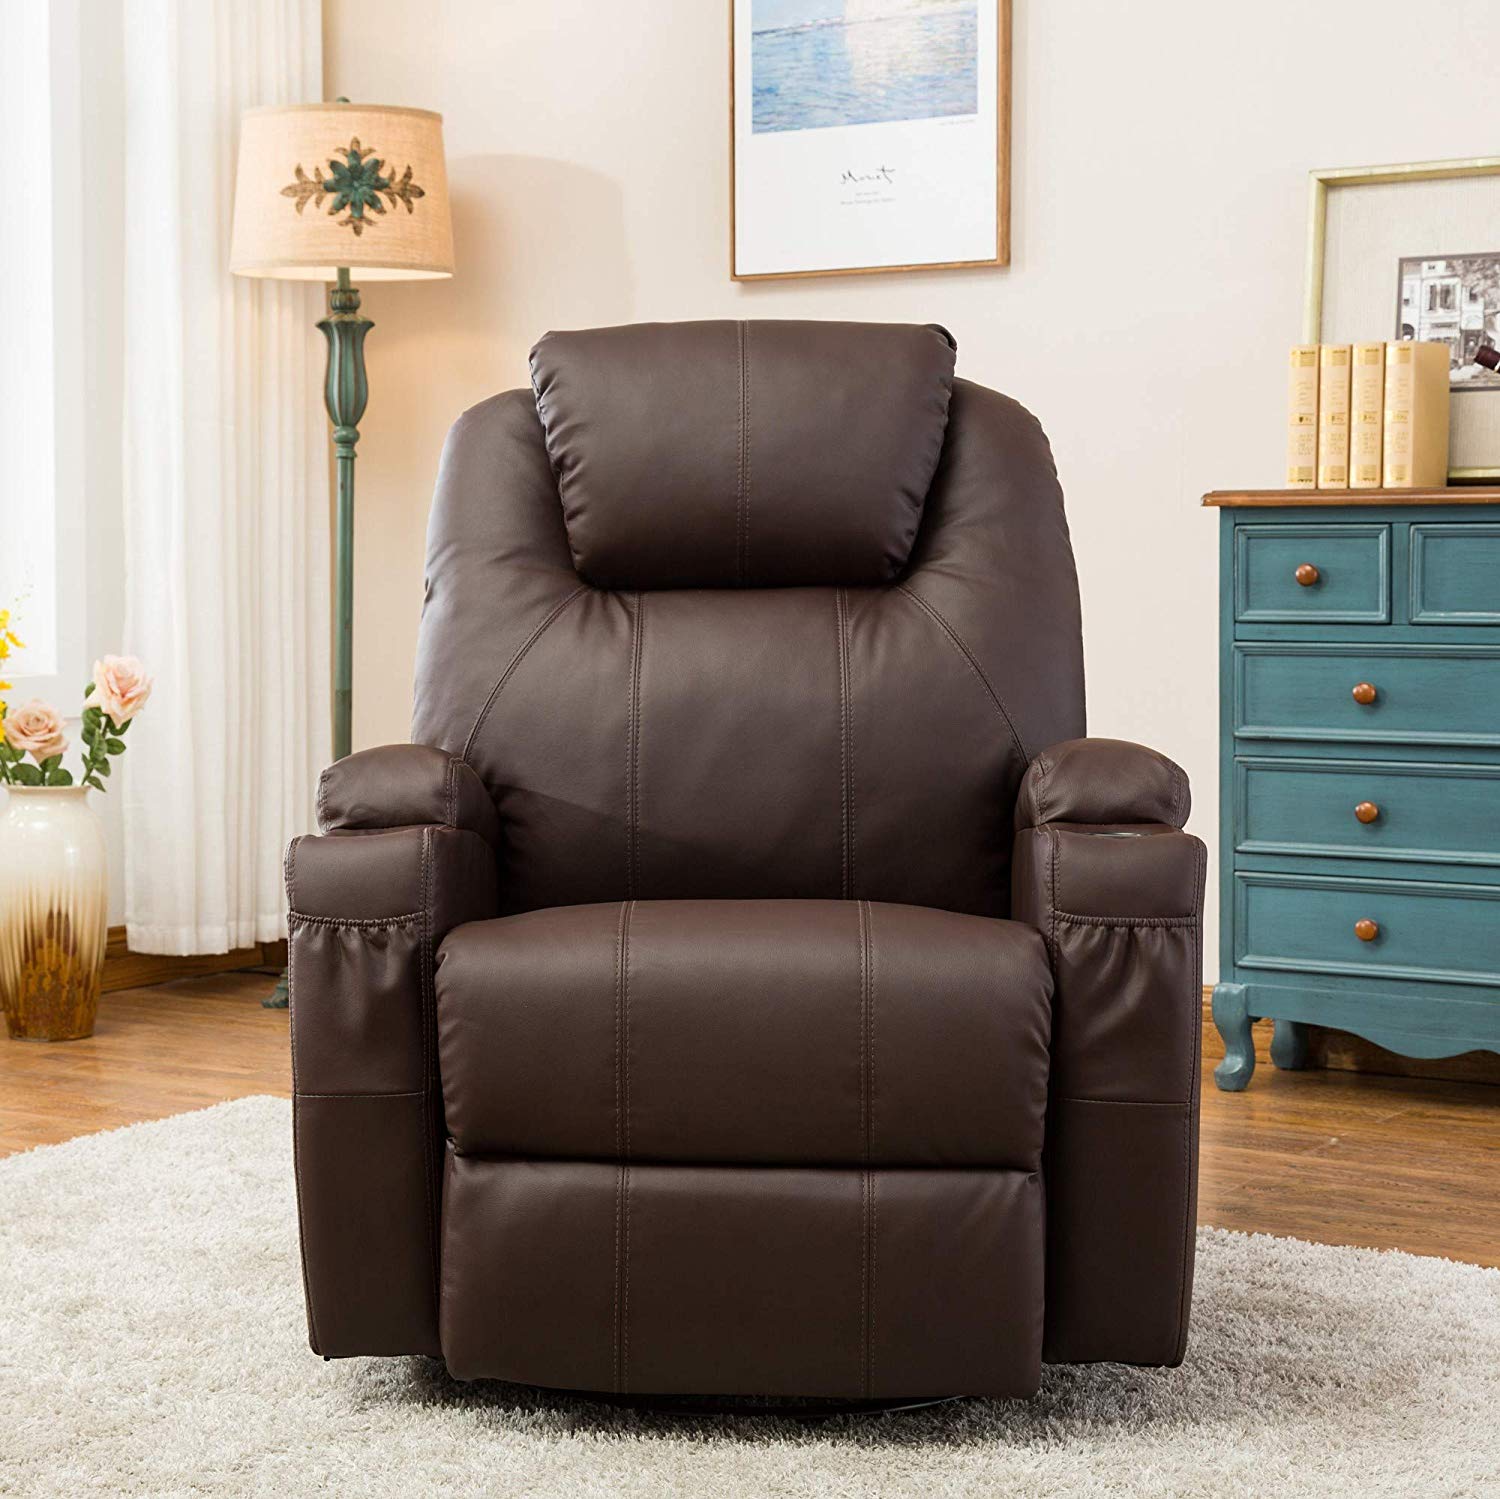 Mcombo Modern Massage Recliner Chair, Ergonomic Leather Recliner